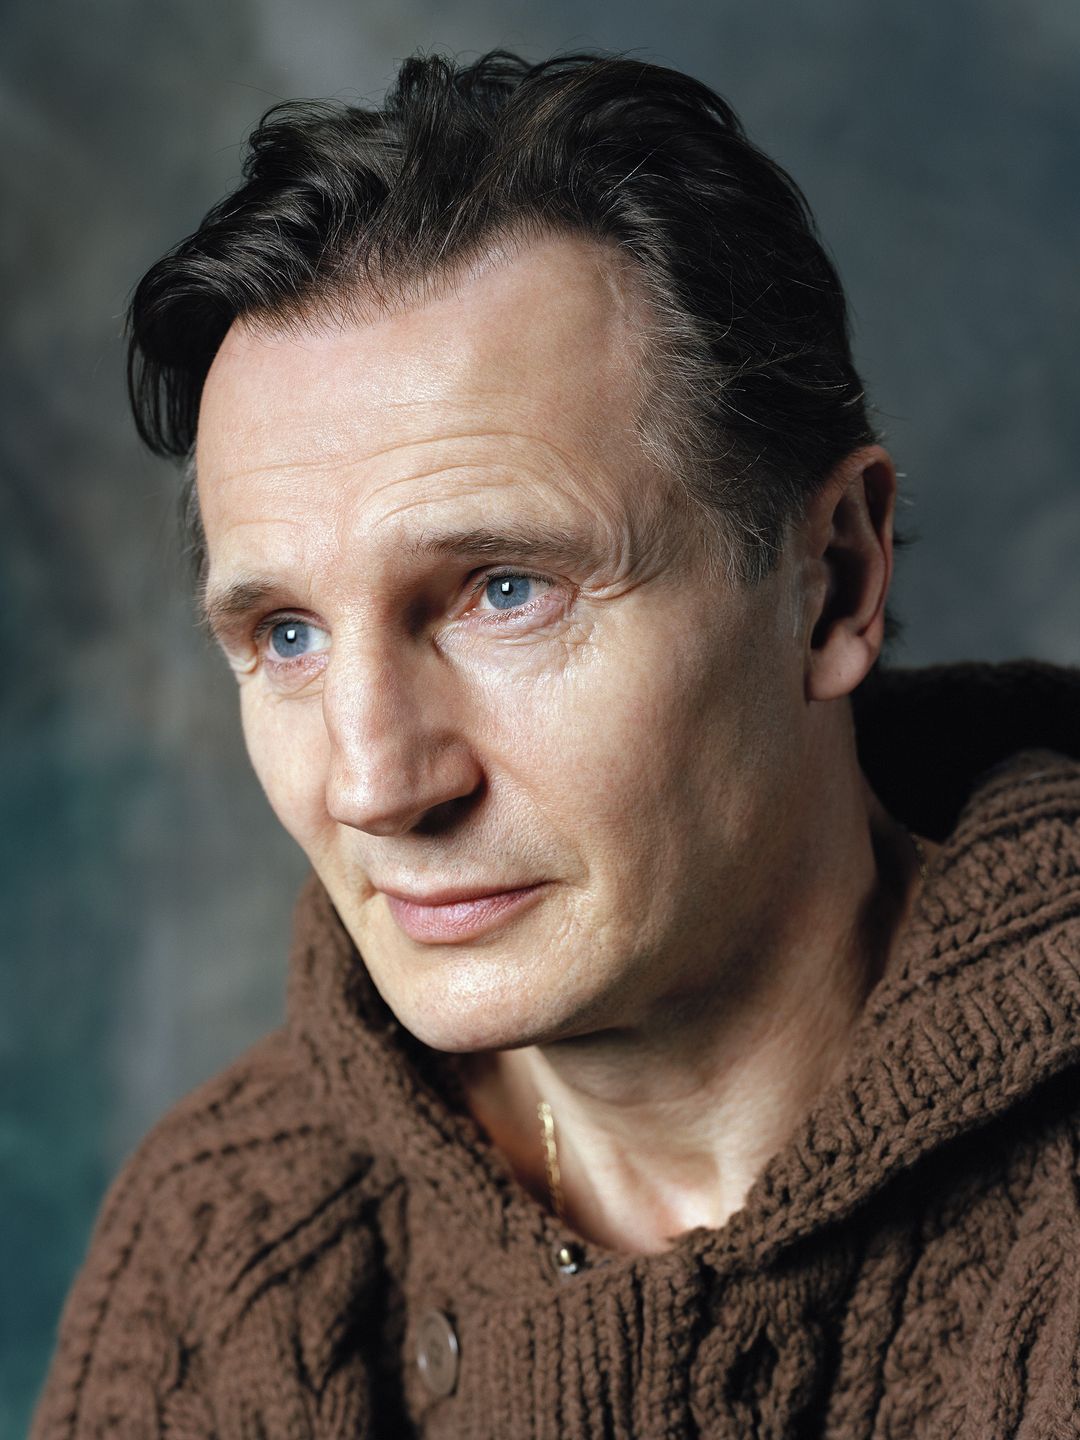 Liam Neeson young pics